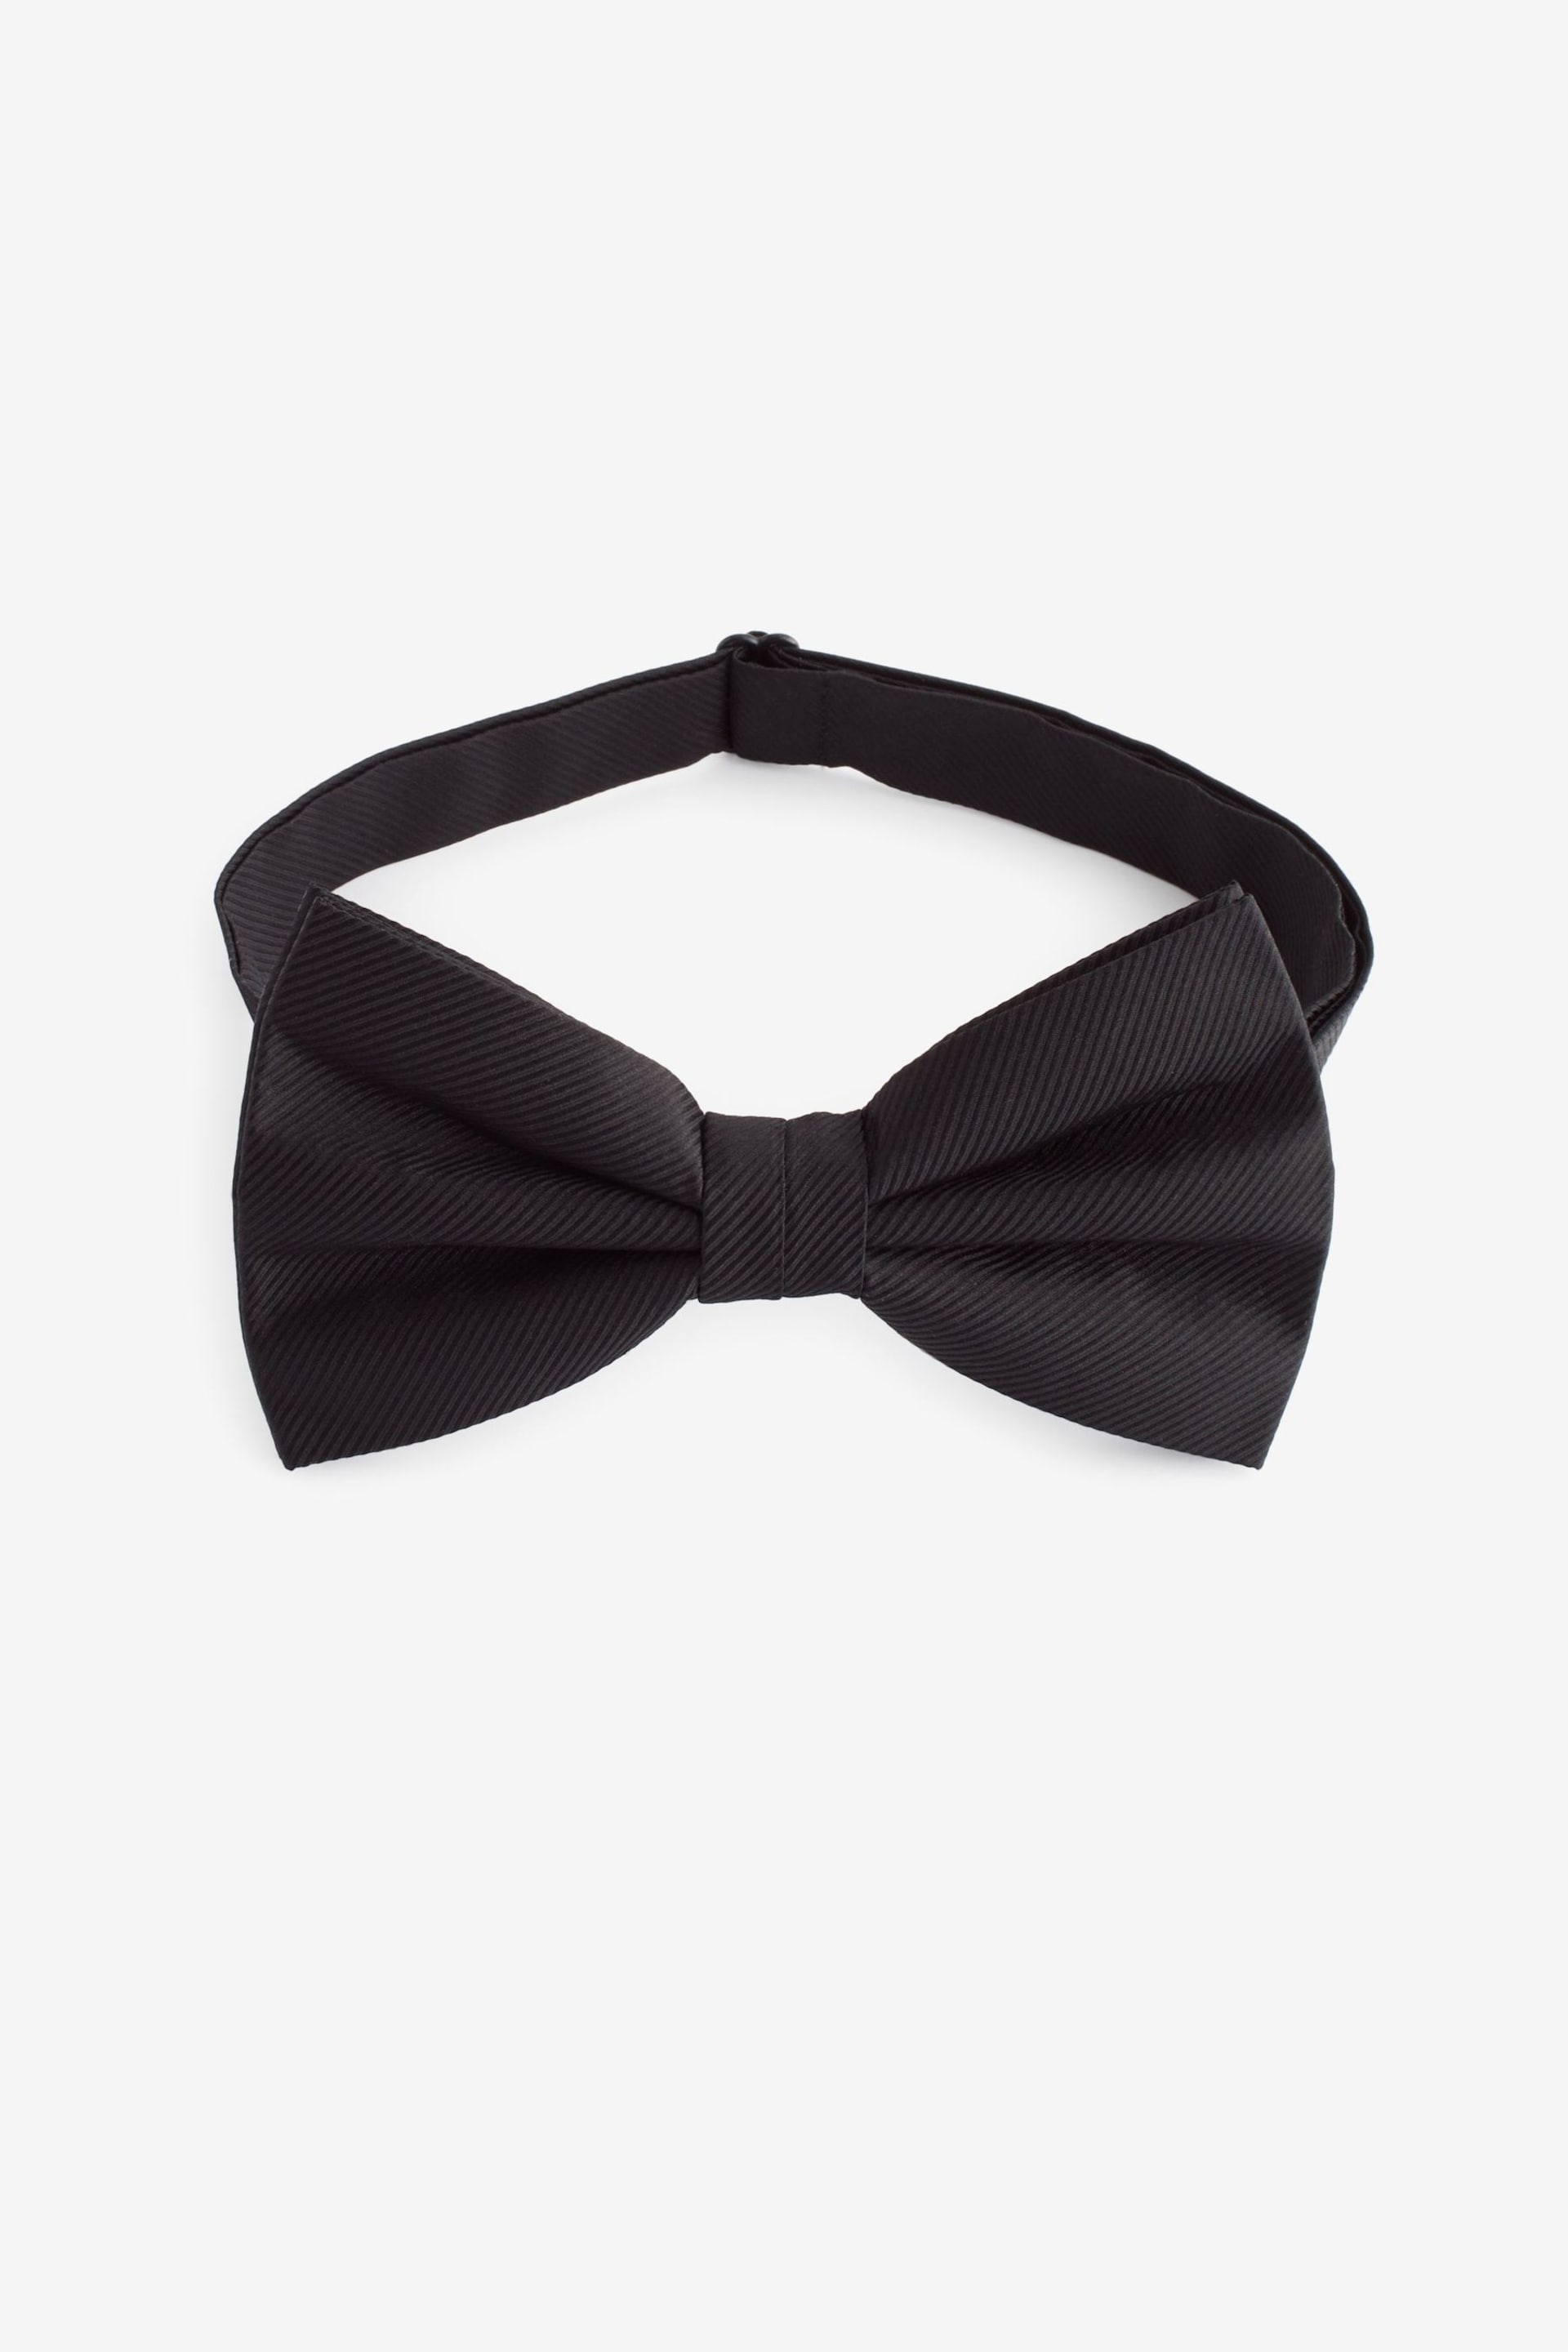 Black Twill Silk Bow Tie - Image 1 of 3